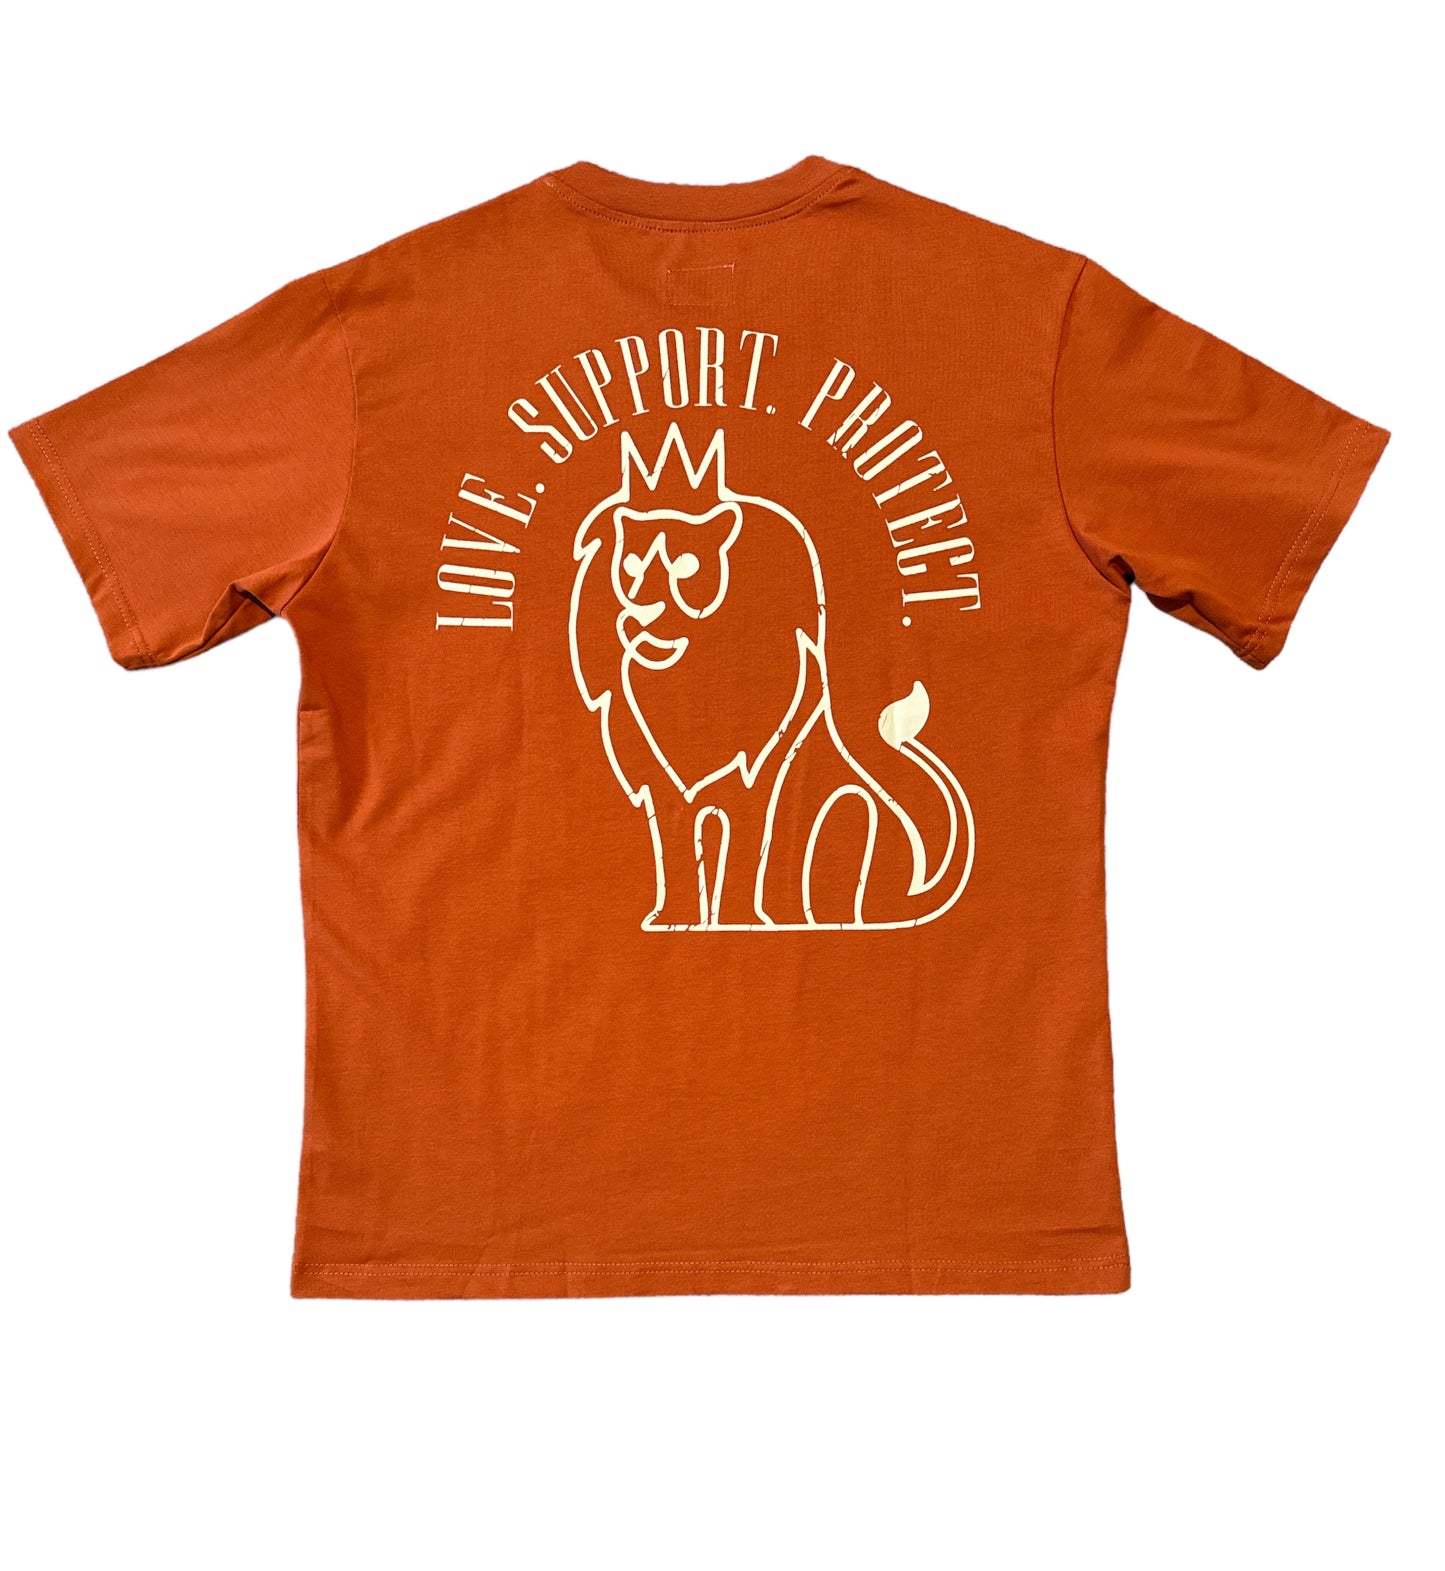 Myan ORANGE “i am dad.” T-Shirt